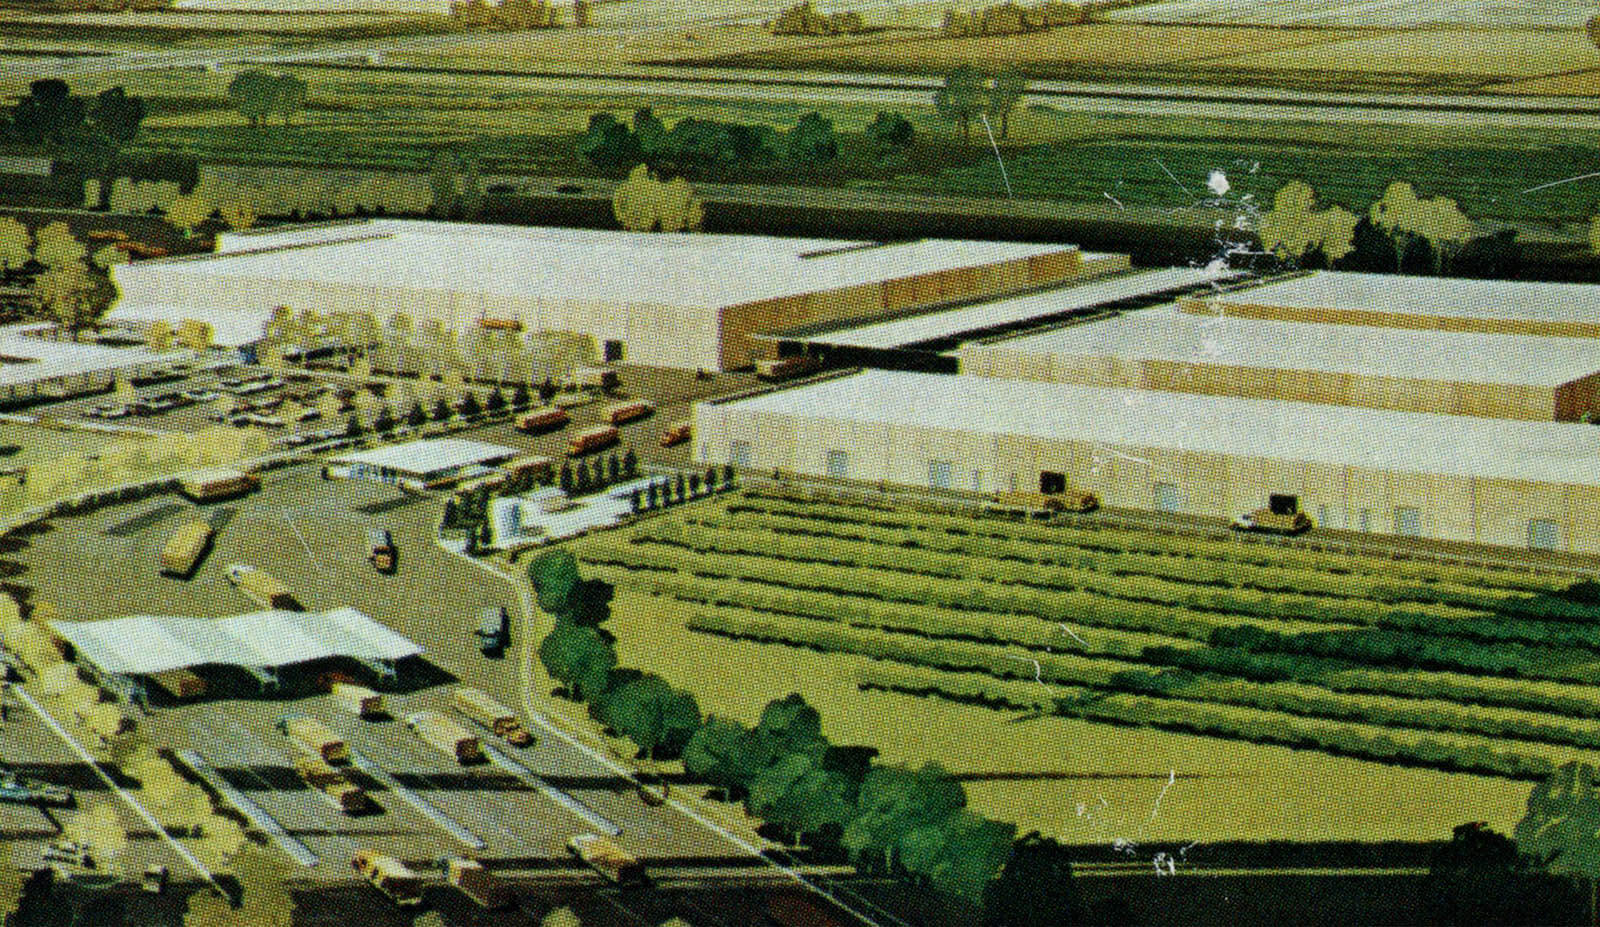 Sun-Maid's factory in Kingsburg, California